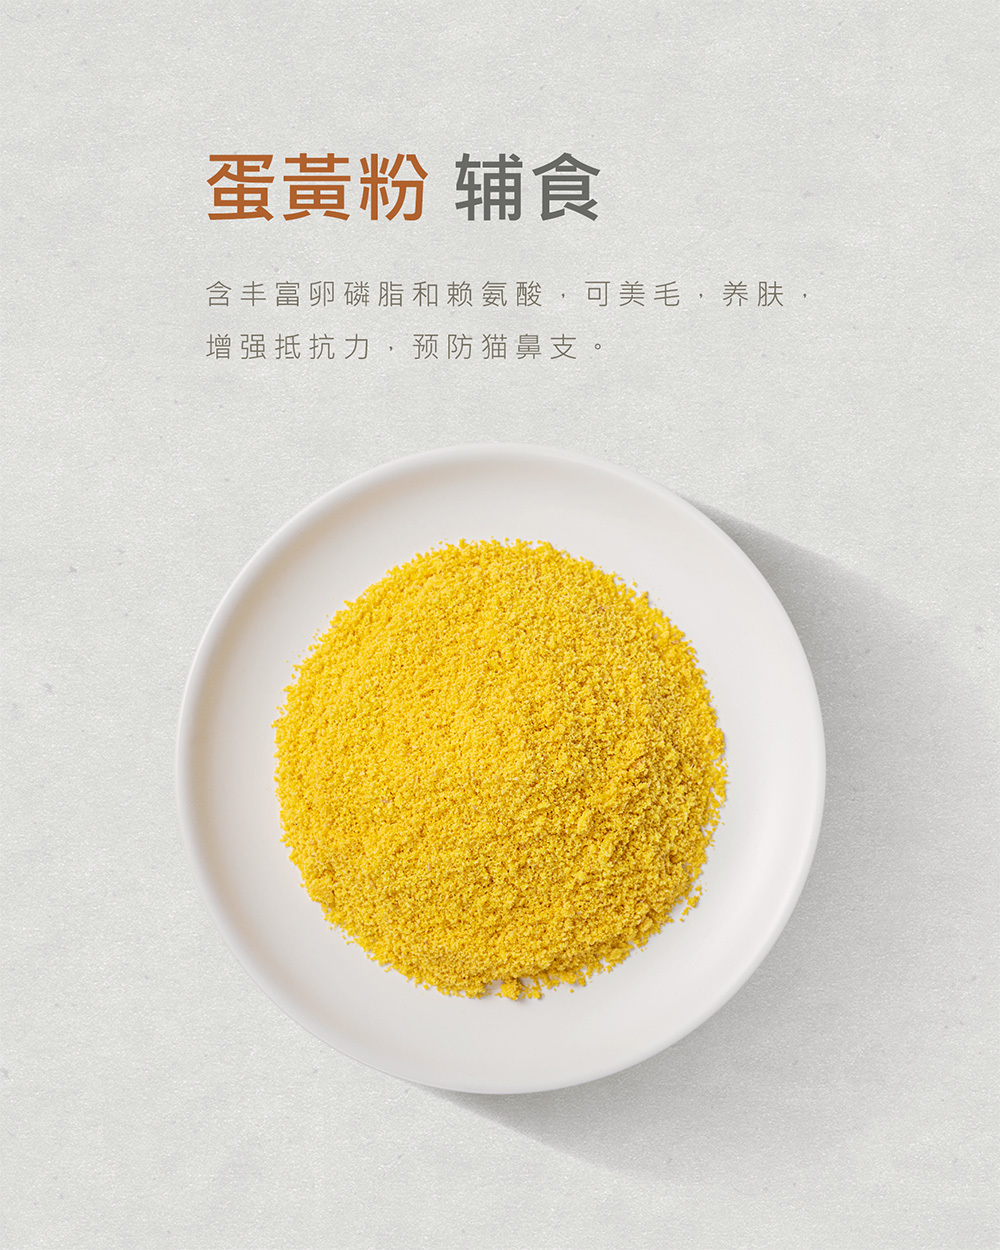 juma-freeze-dried-egg-yolk-powder.jpg